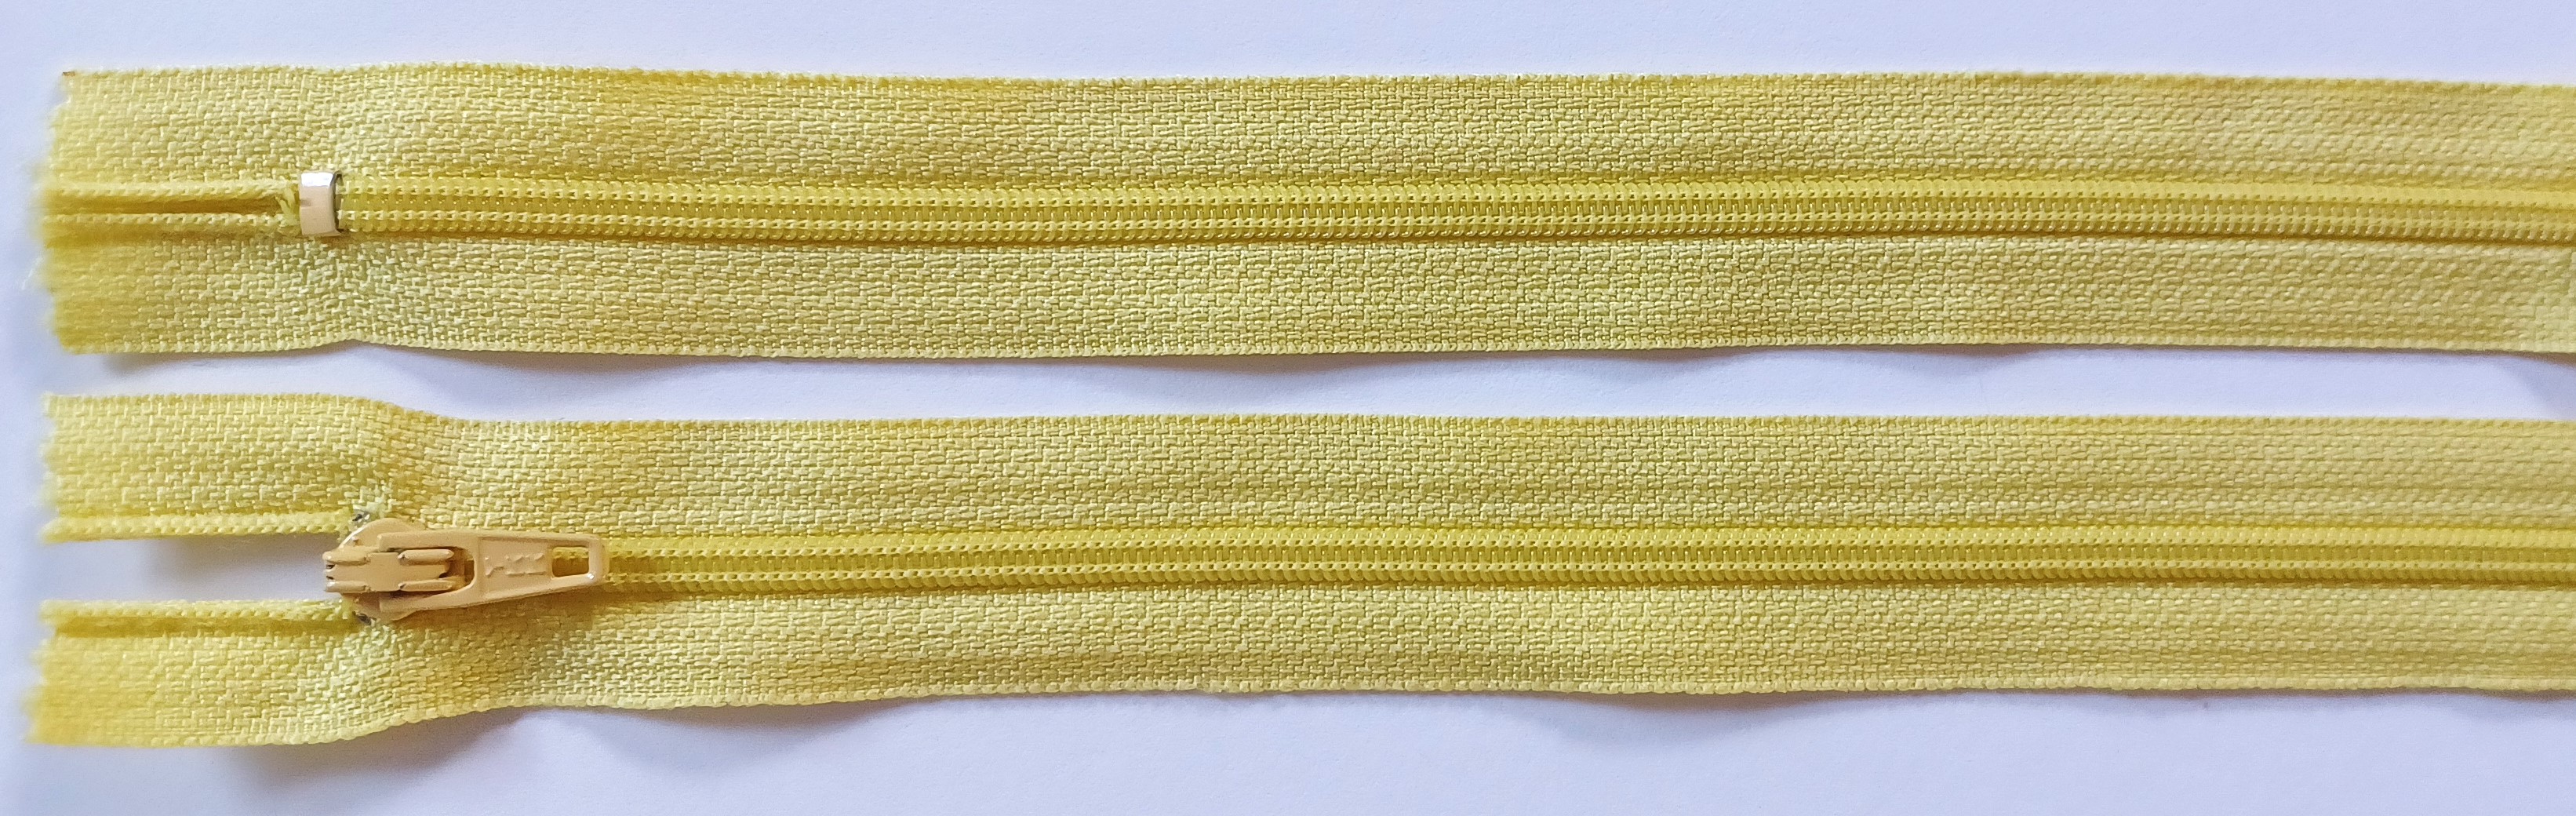 YKK 7.5" Sunny Yellow Nylon Coil Zipper